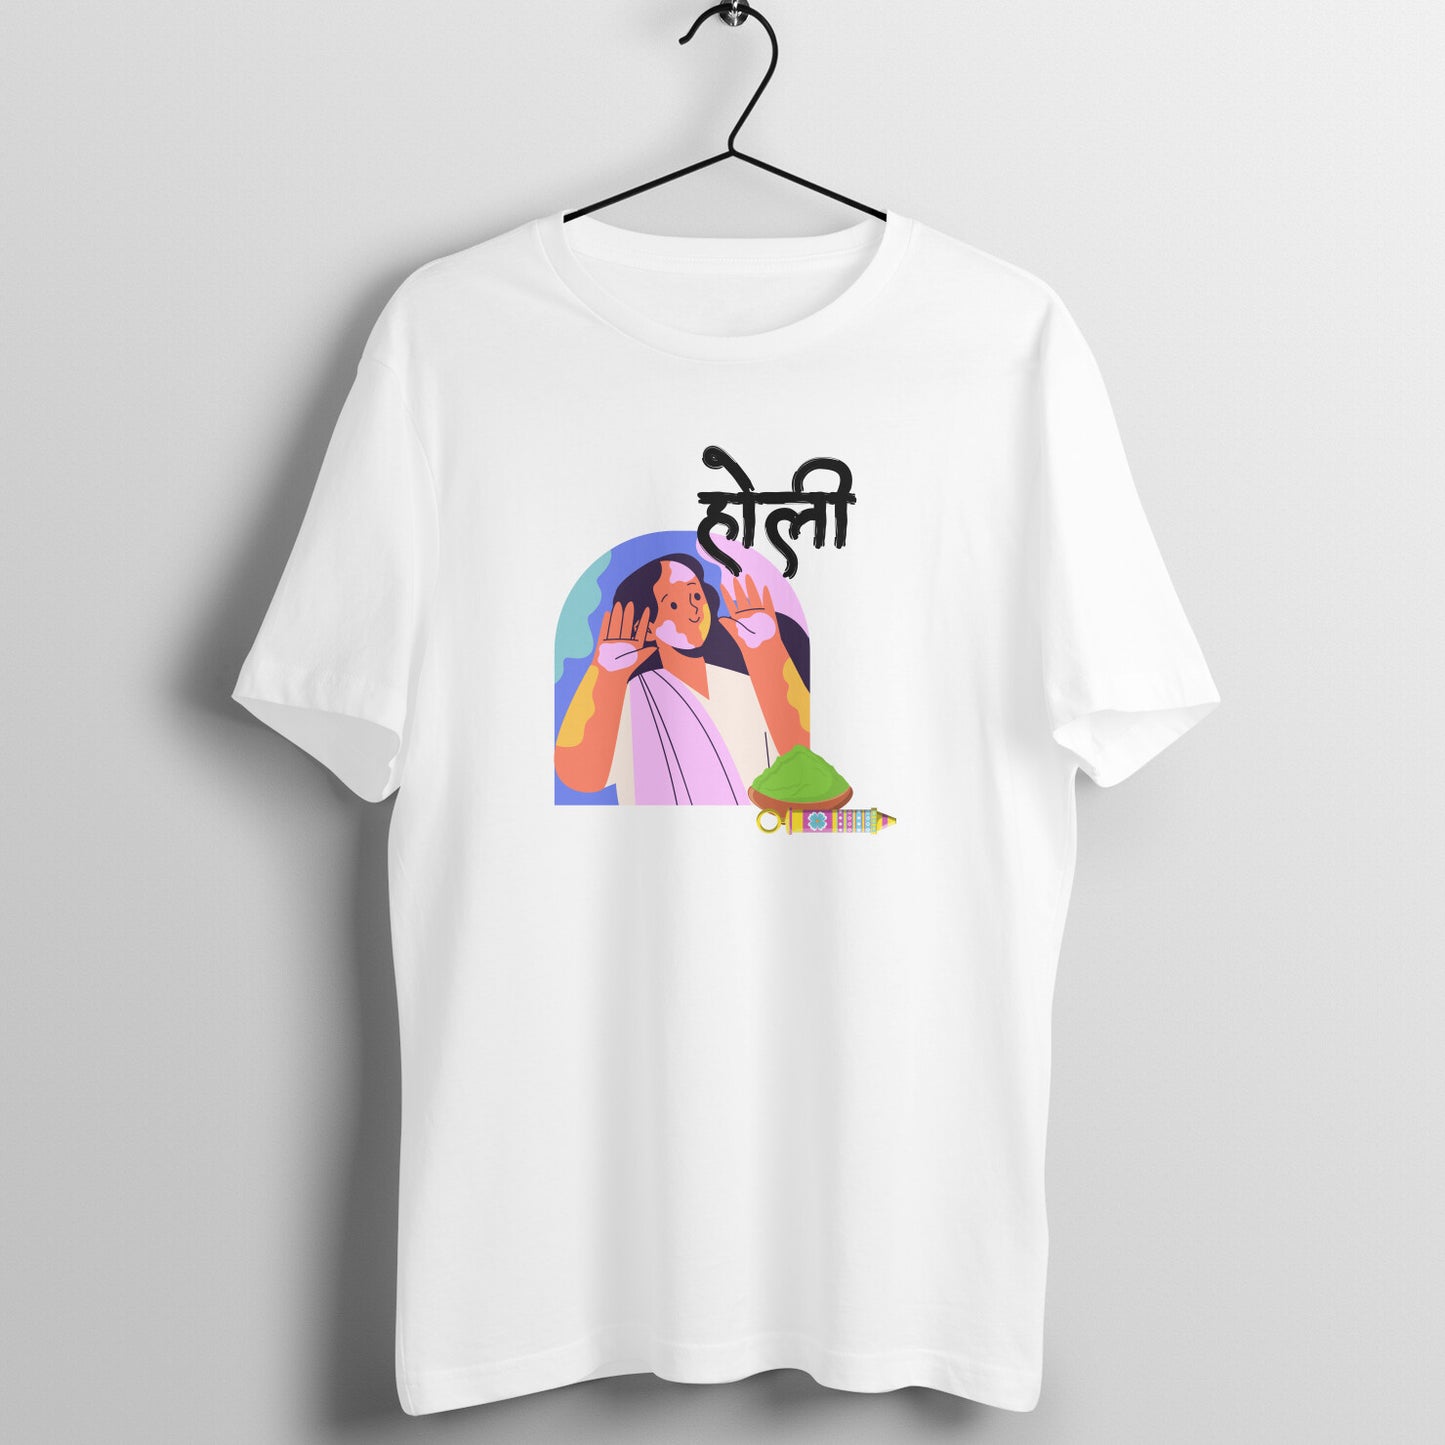 Cultural Celebration: Men's Round Neck T-Shirt with Traditional Holi Festival Girl Design